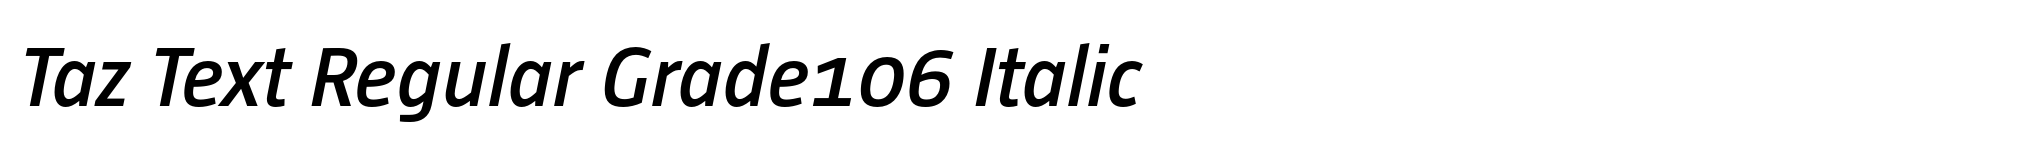 Taz Text Regular Grade106 Italic image